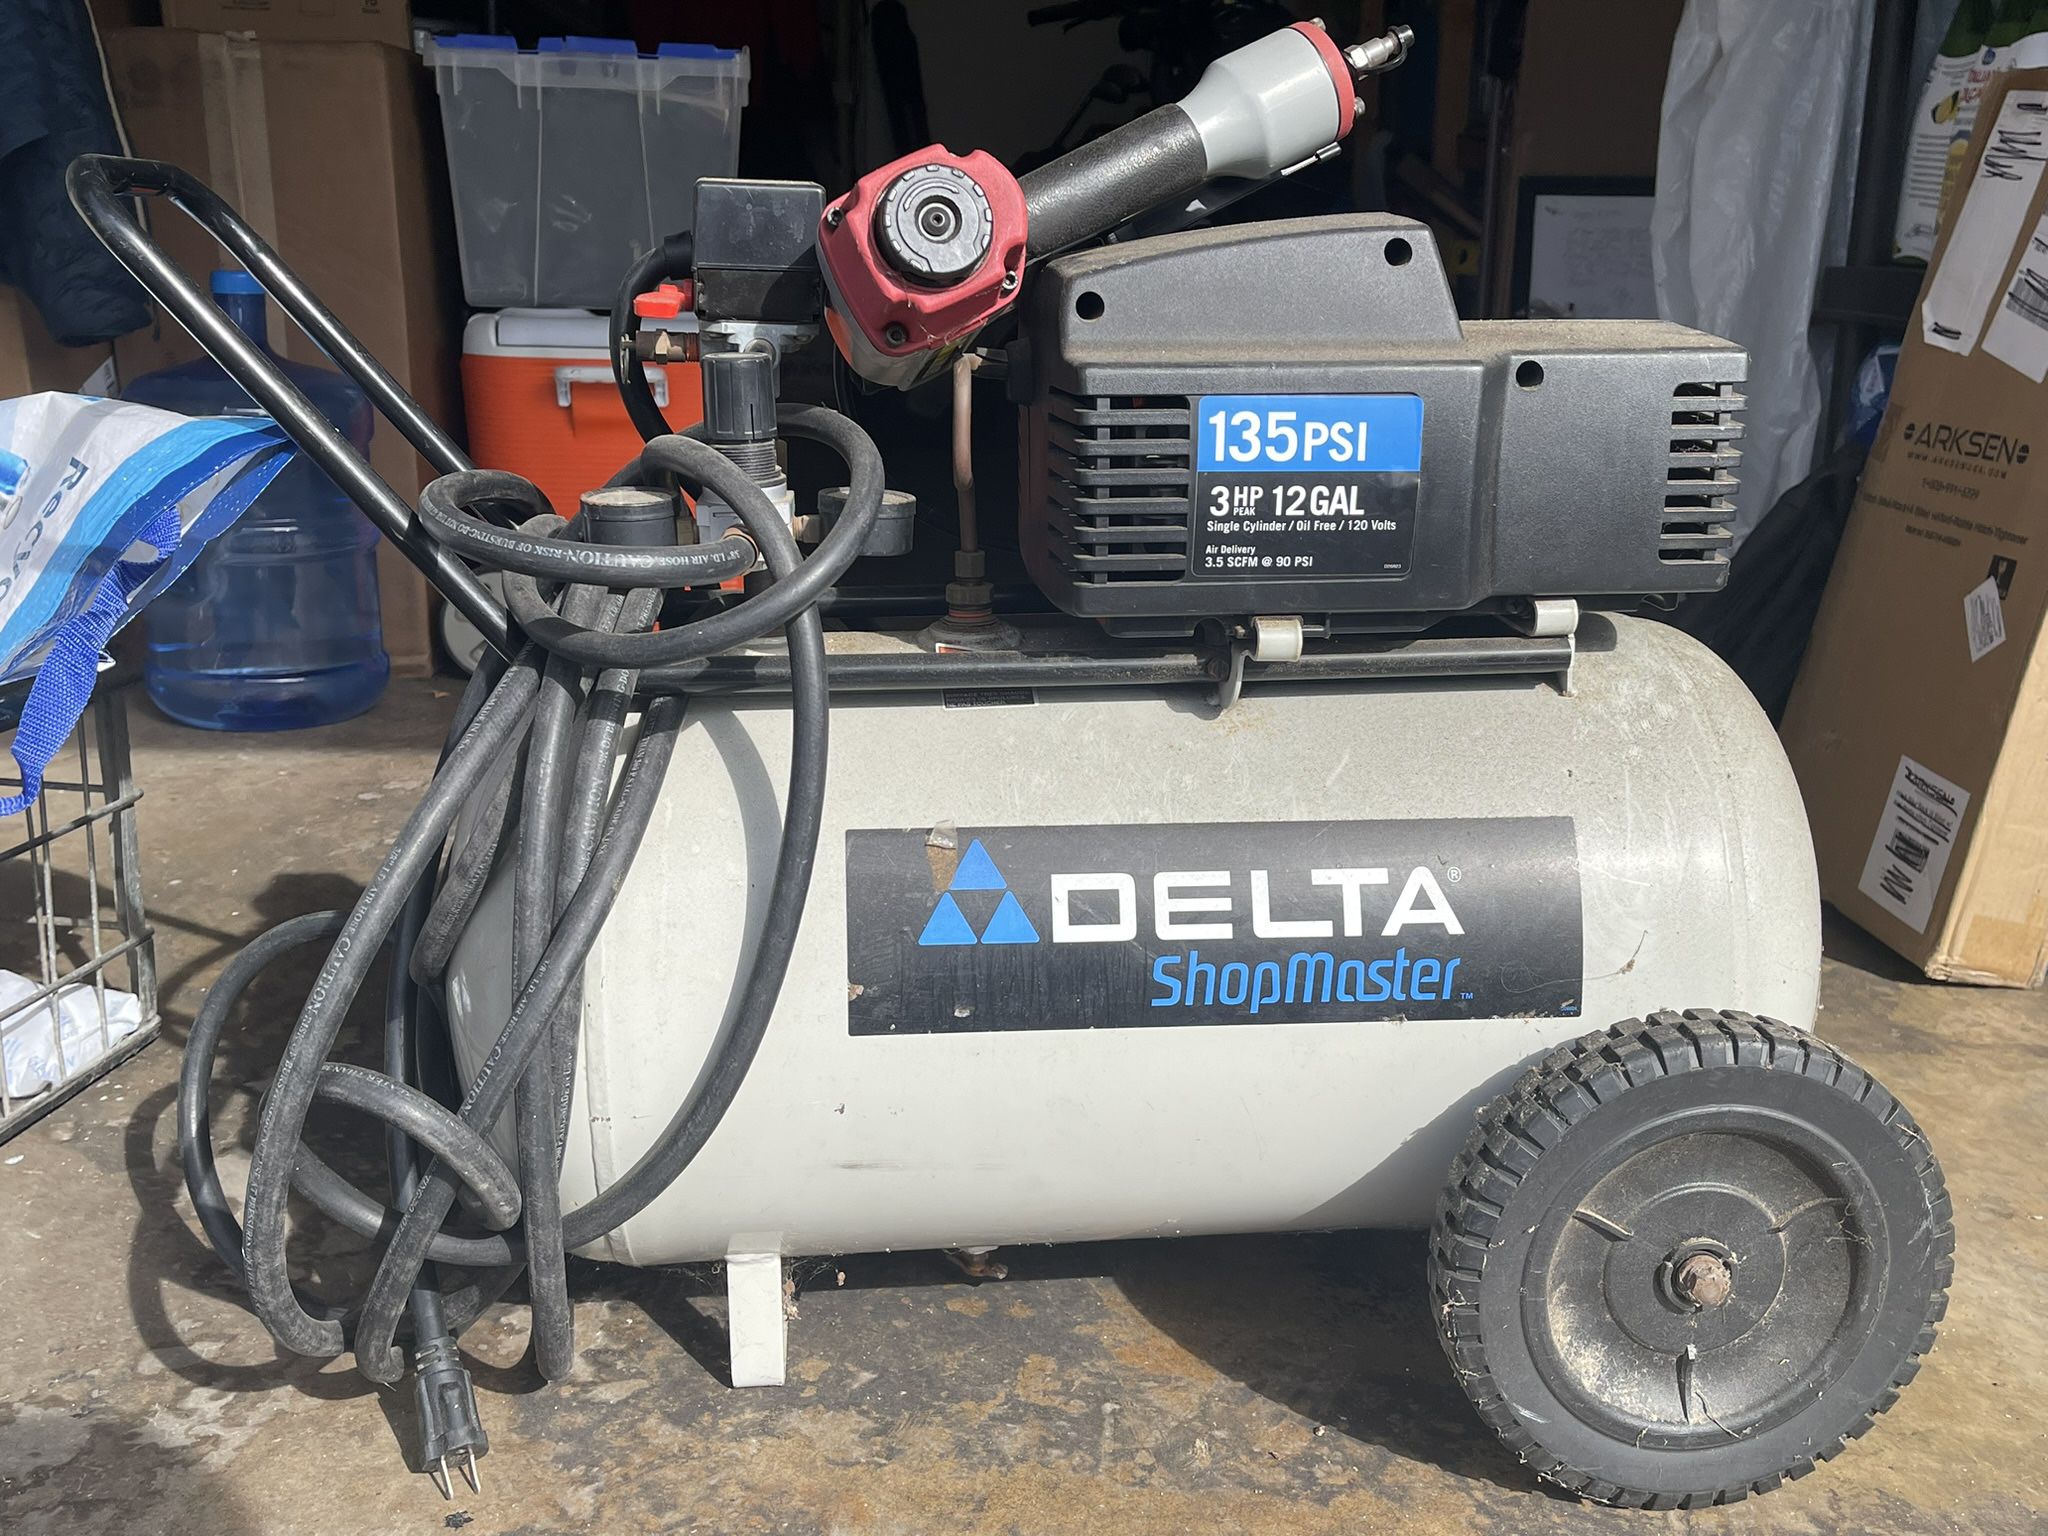 Workshop Air Compressor - Delta ShopMaster 12 Gallon 135 PSI